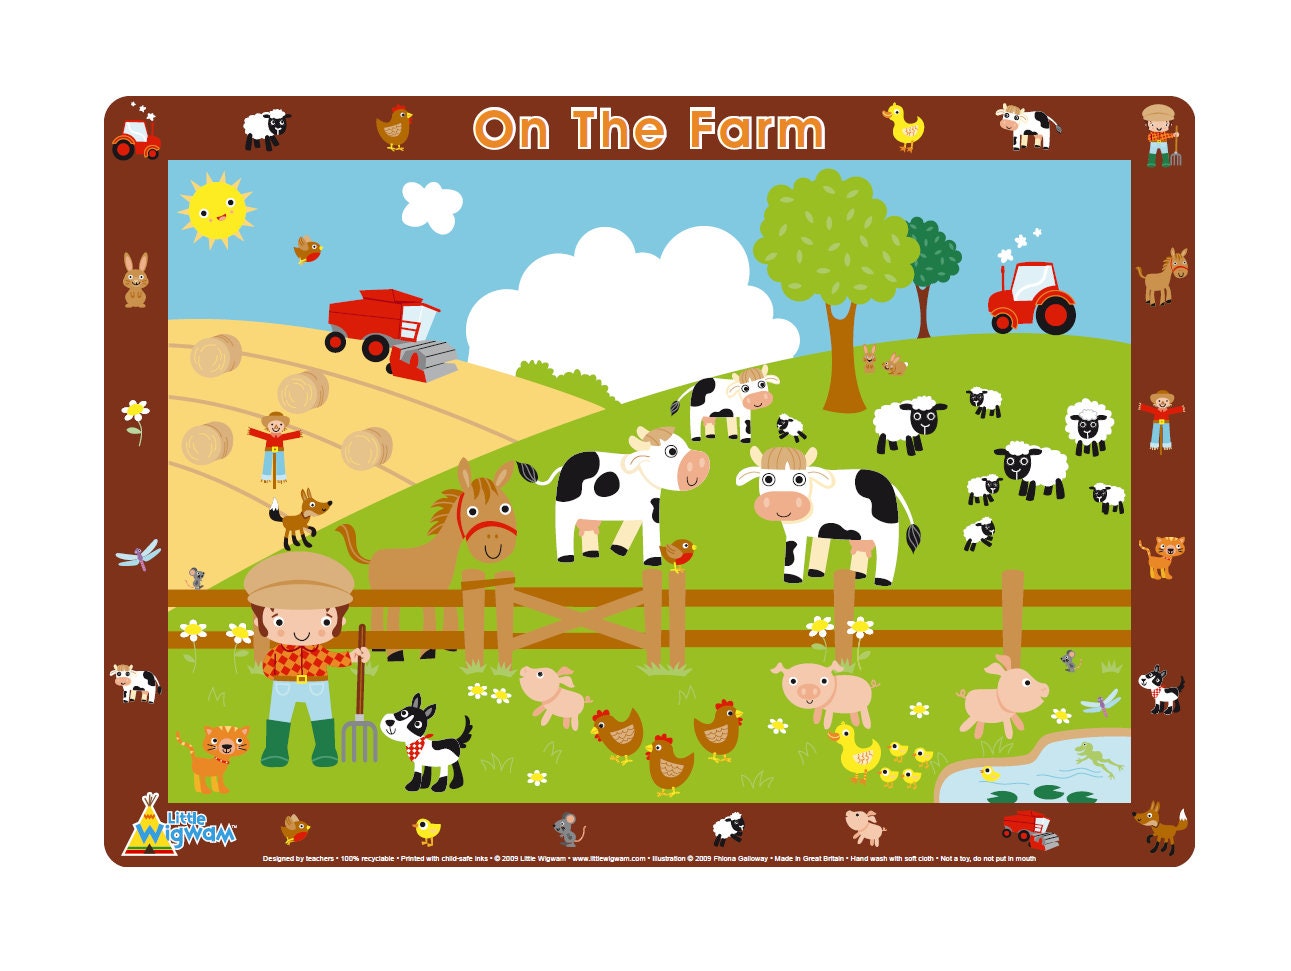 He lives on the farm. Ферма для детей. Картинки ферма для детей в детском саду. Картинка ферма для детей для занятия. On the Farm картинки для детей.